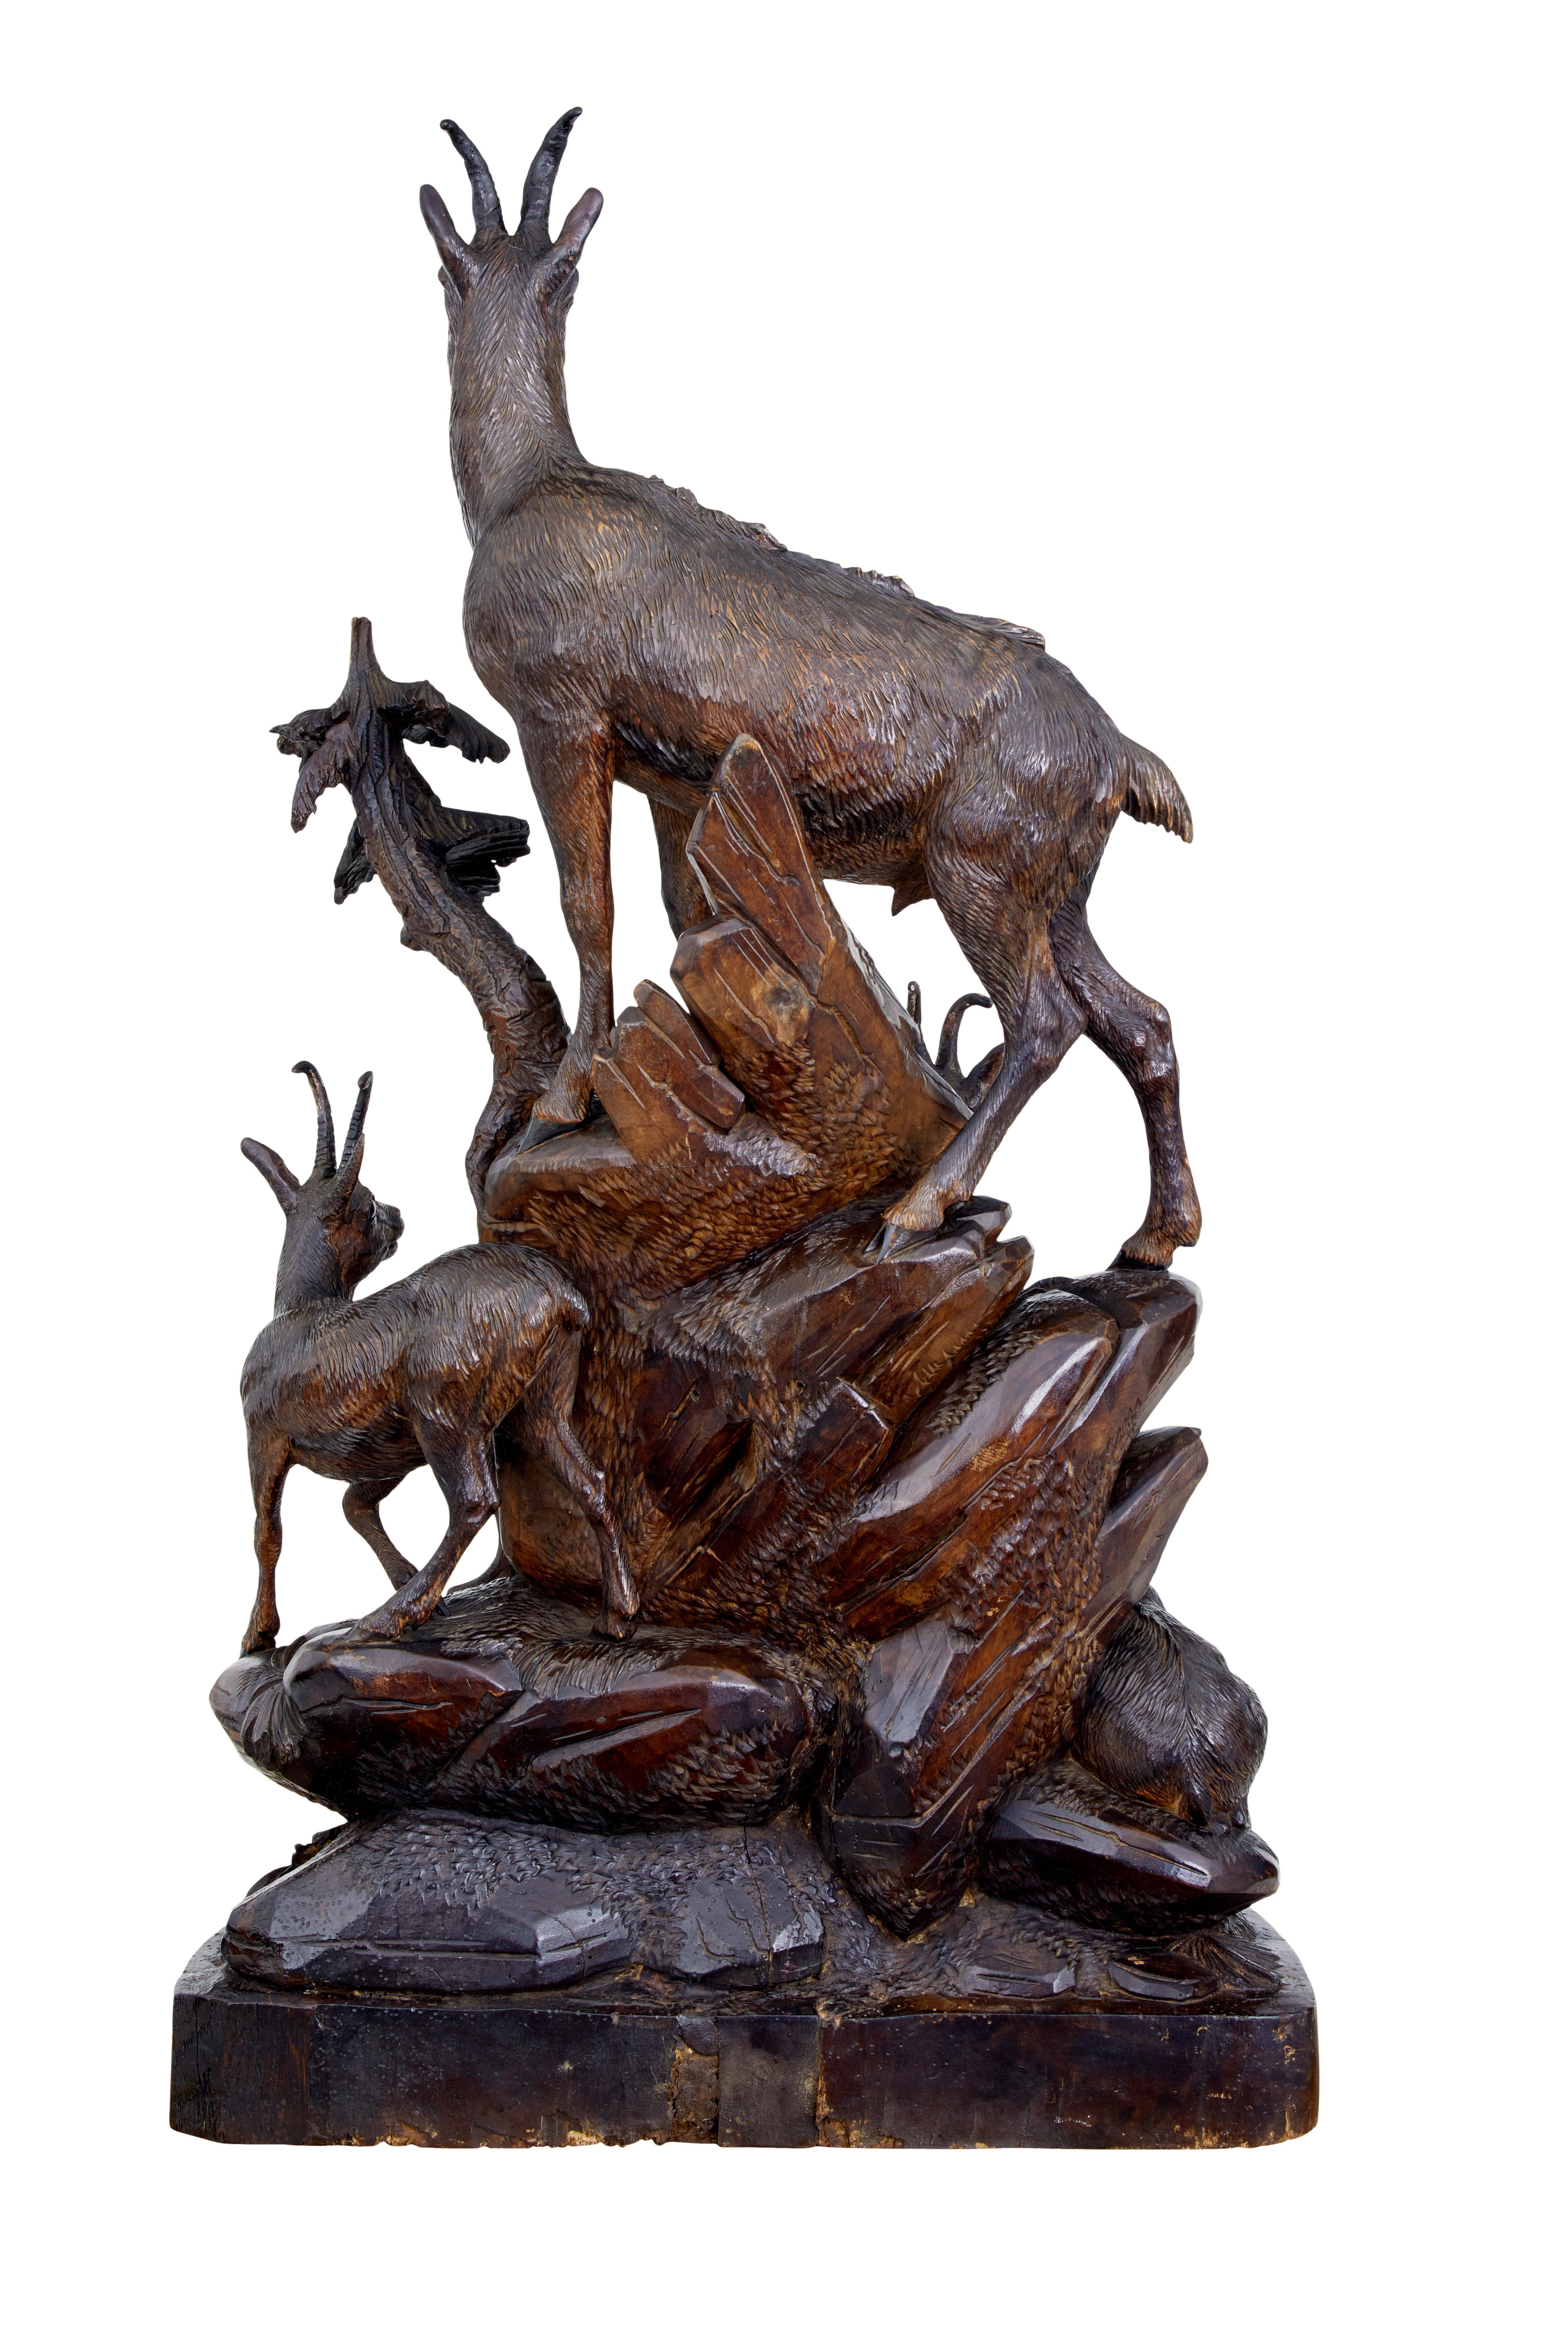 Carved 19th century carved black forest ibex sculpture linden wood For Sale